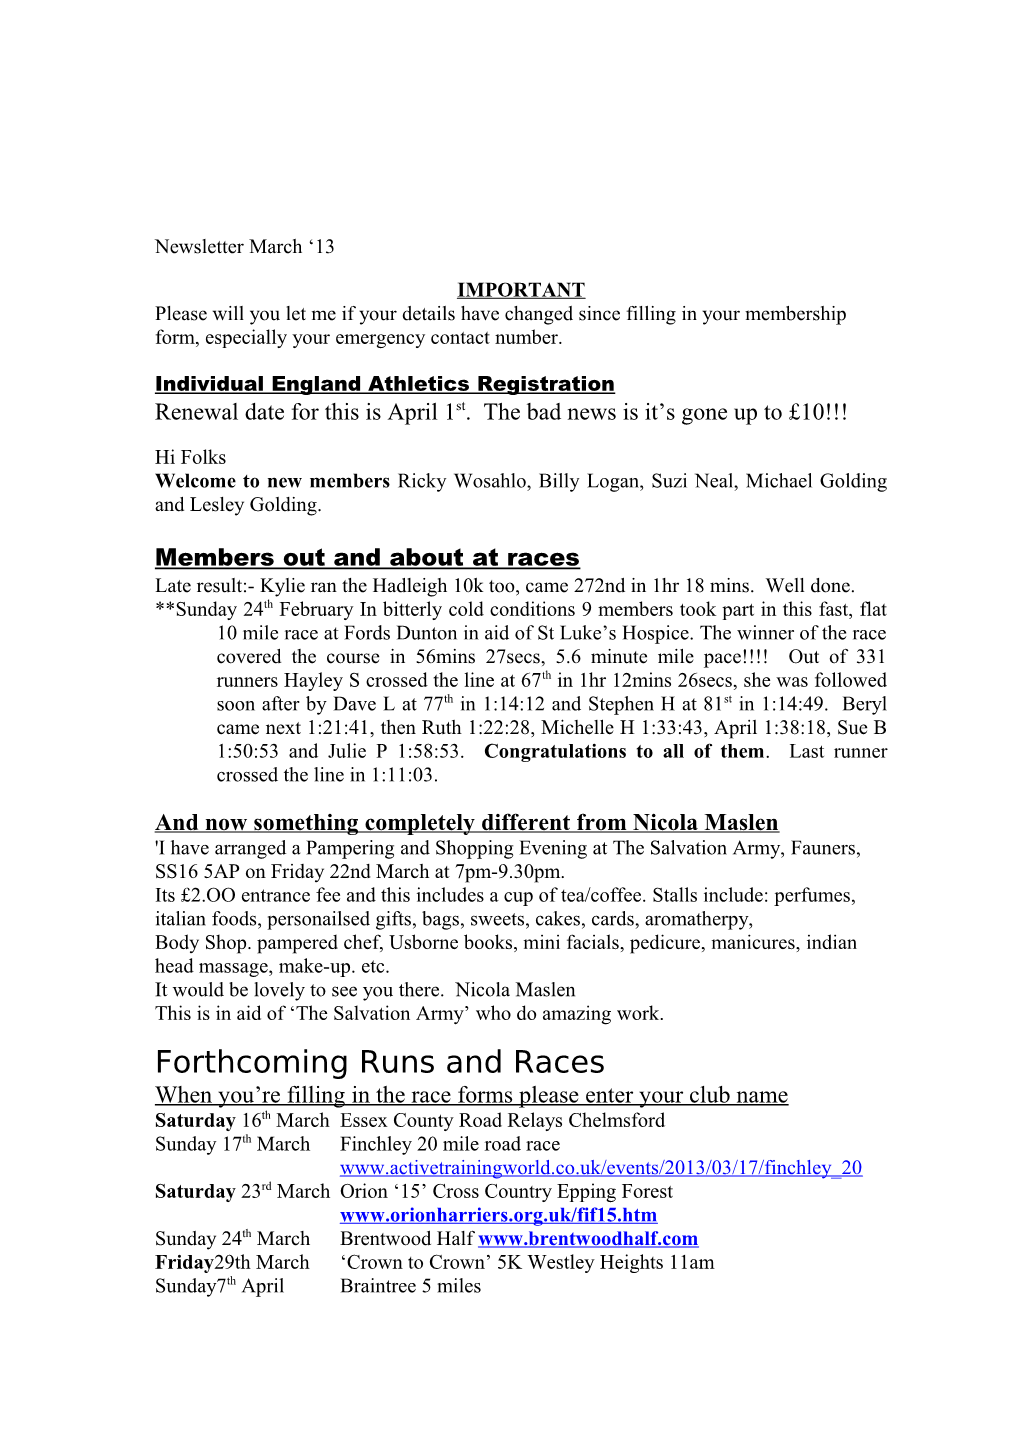 Individual England Athletics Registration